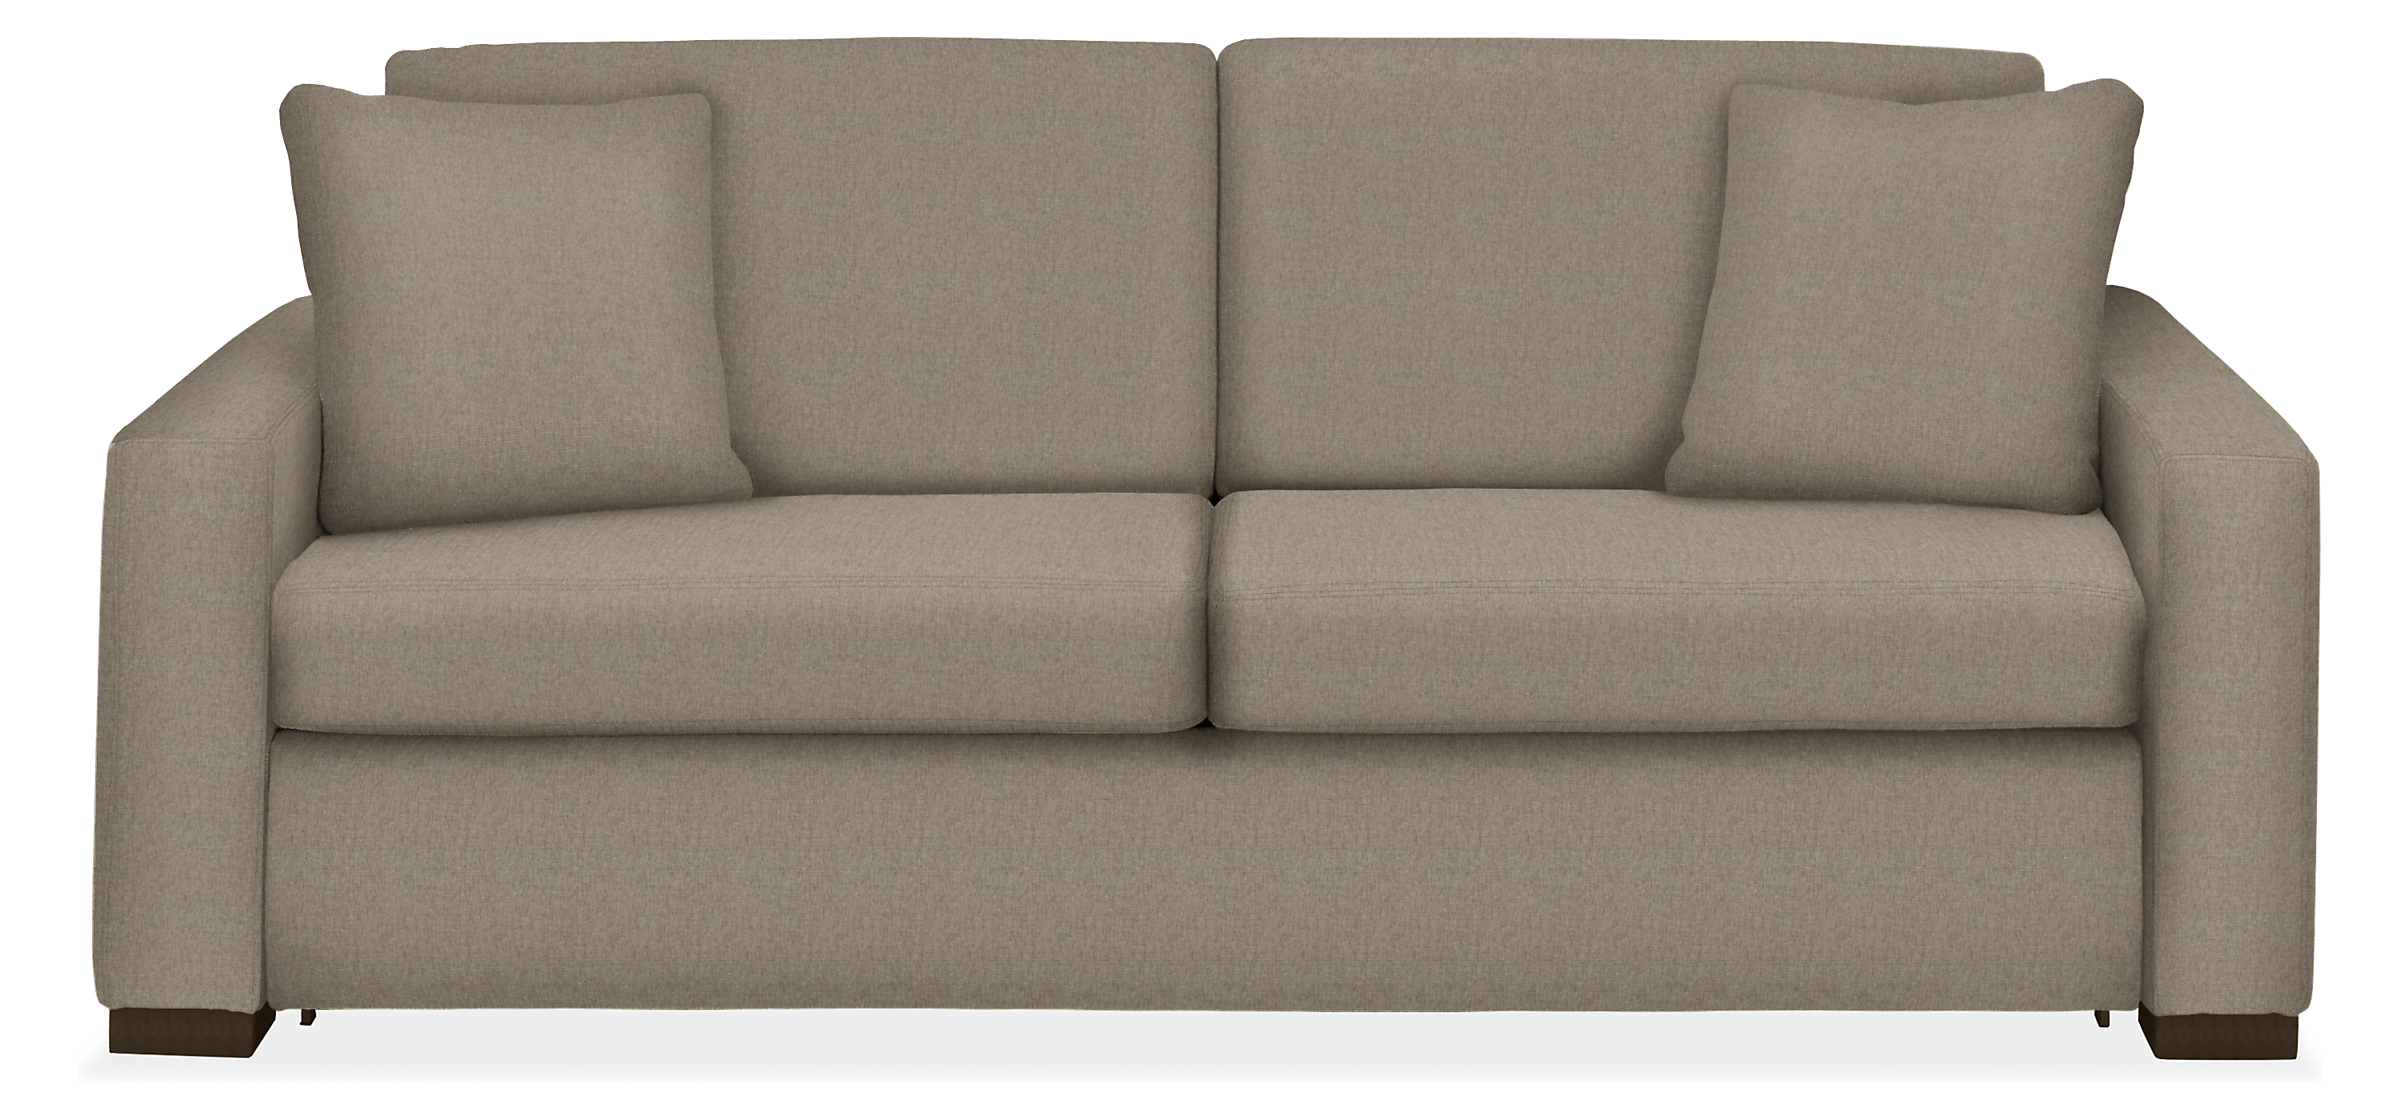 Metro 88" Fold-out Sleeper Sofa